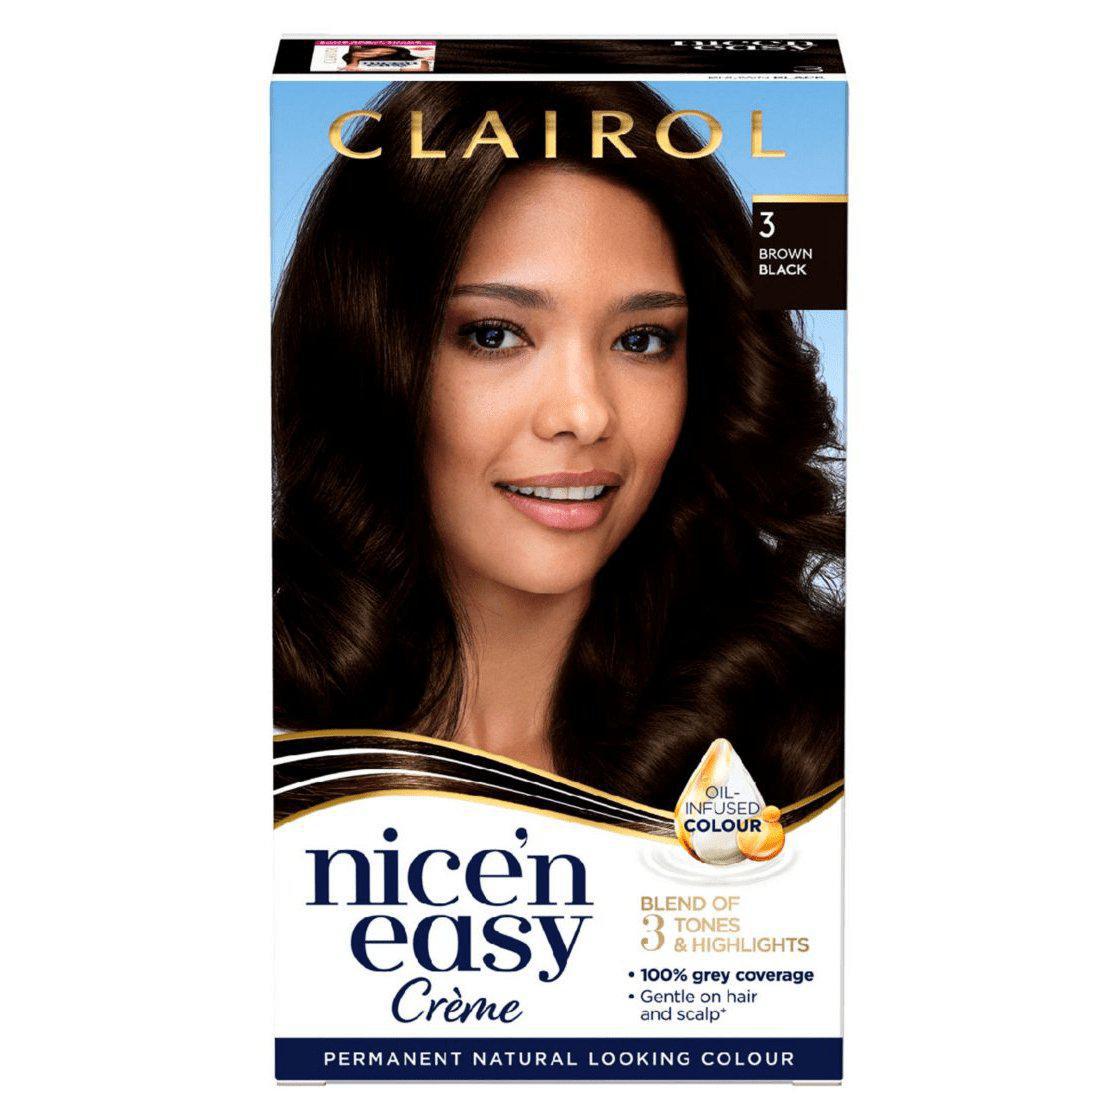 Clairol Nice N Easy Crème Natural Looking Permanent Hair Dye - 3 Brown Black - Healthxpress.ie